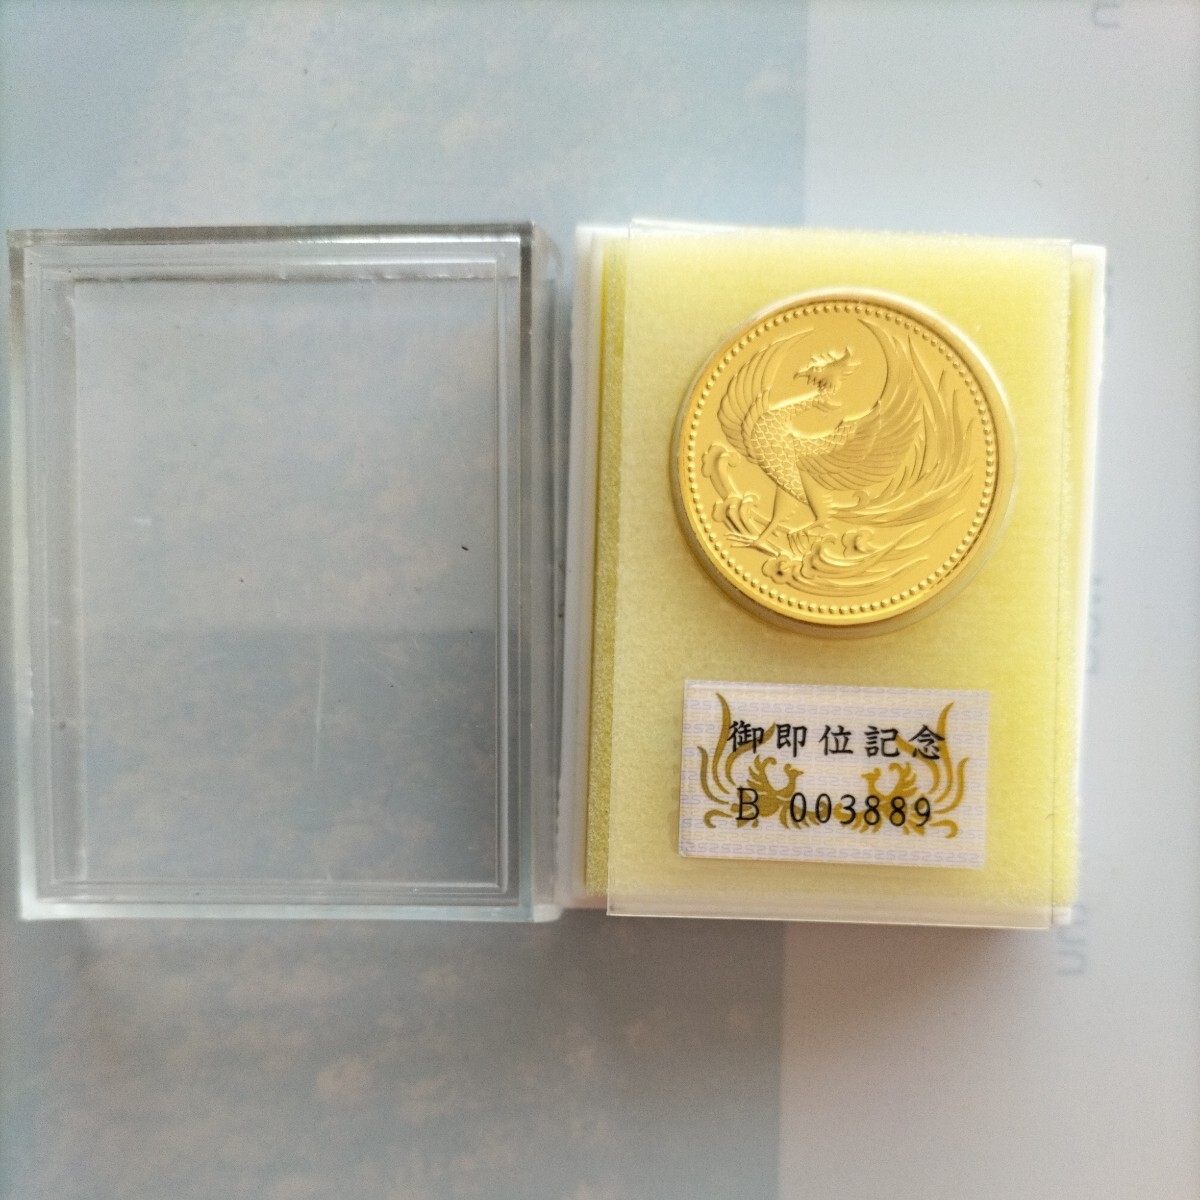  K24（24金） 純金 天皇陛下御即位記念 10万円プルーフ金貨 30g ケース入り 平成2年です_画像3